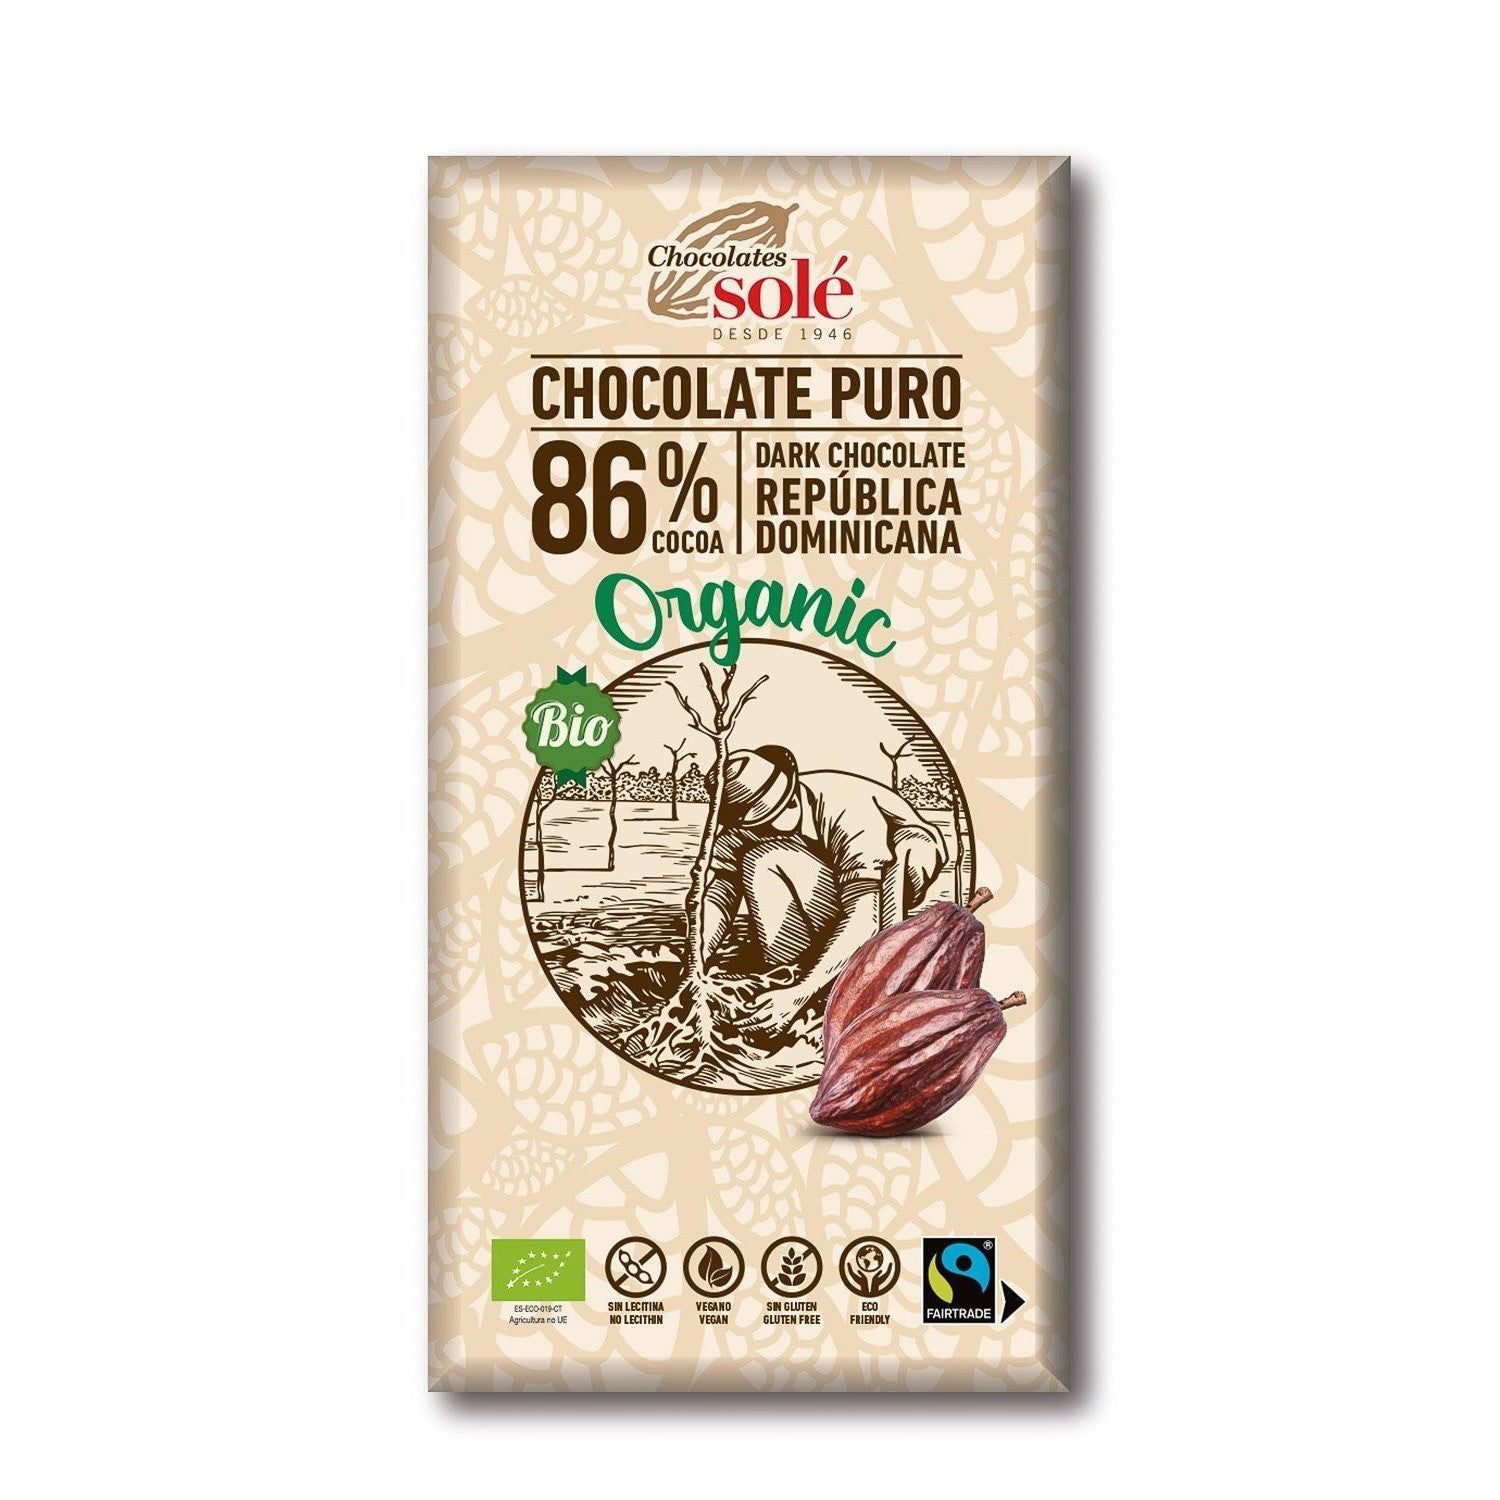 Organic Schokolade 86% (100g) - Gourmet Markt - Chocolates Sole